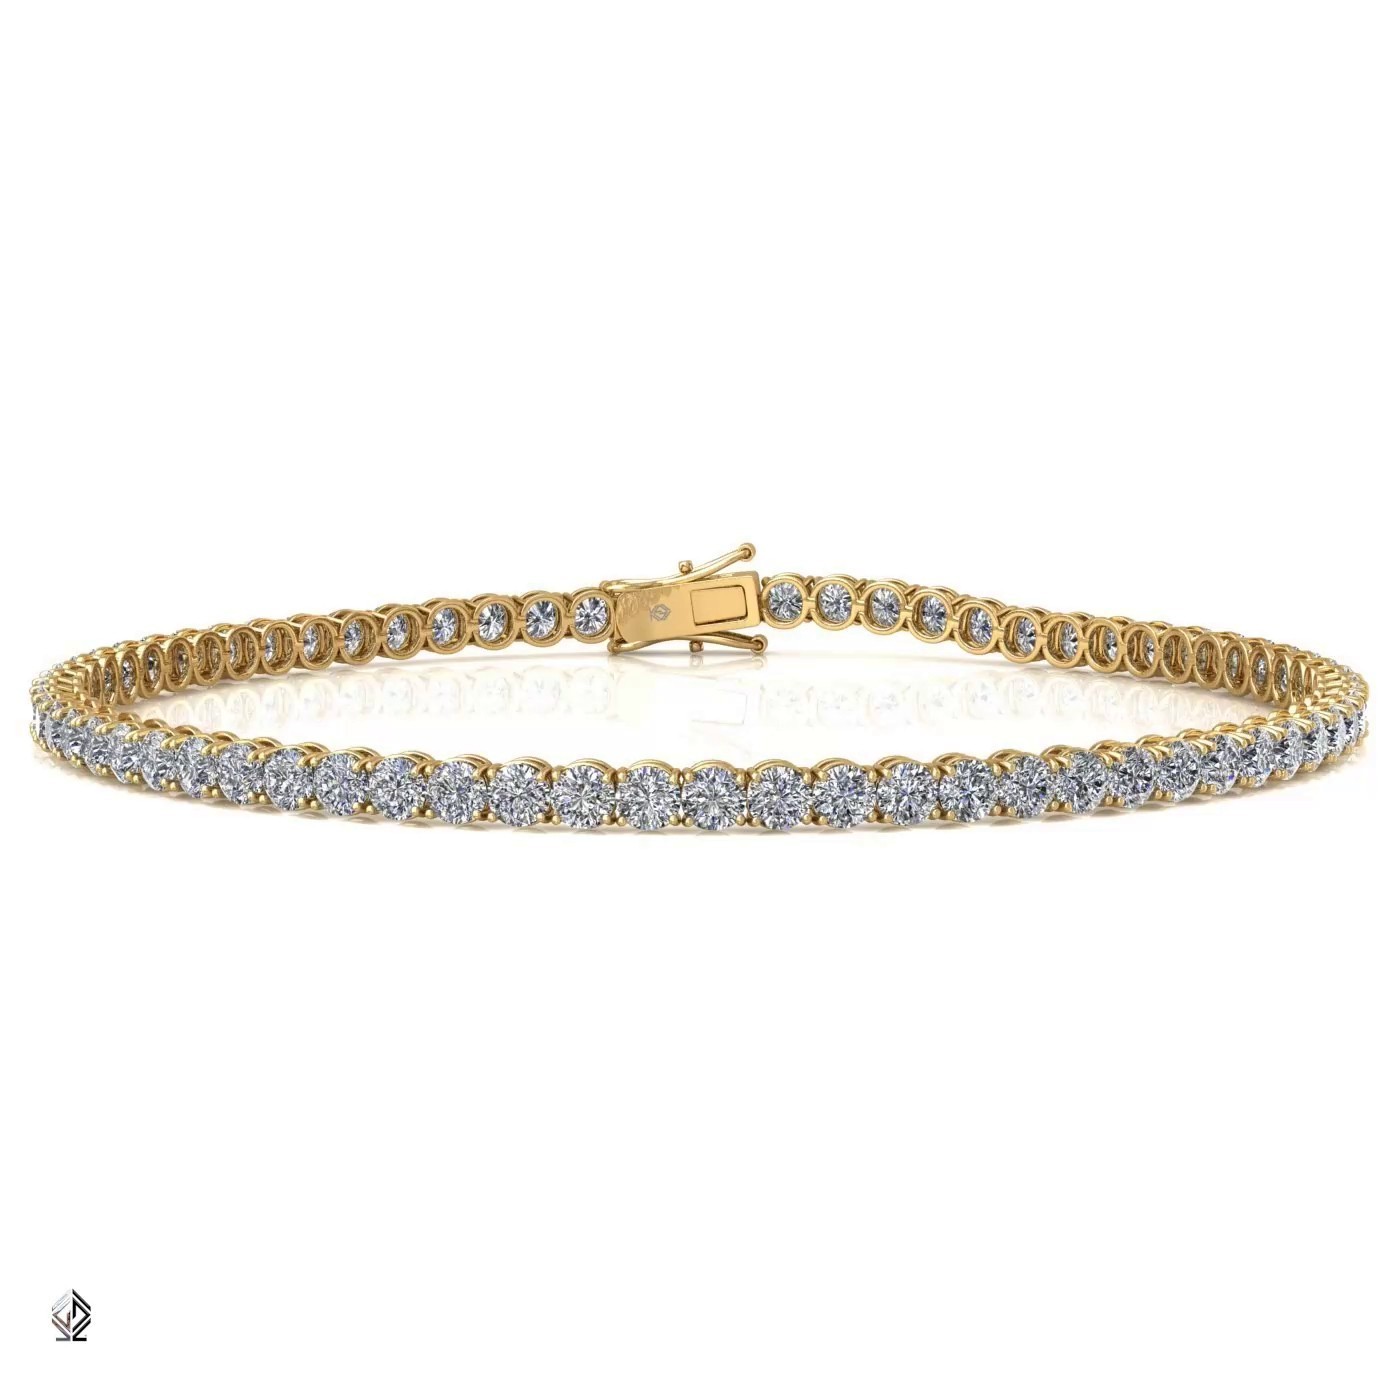 18k white gold 2.4mm 4 prong round shape diamond tennis bracelet in round setting Photos & images